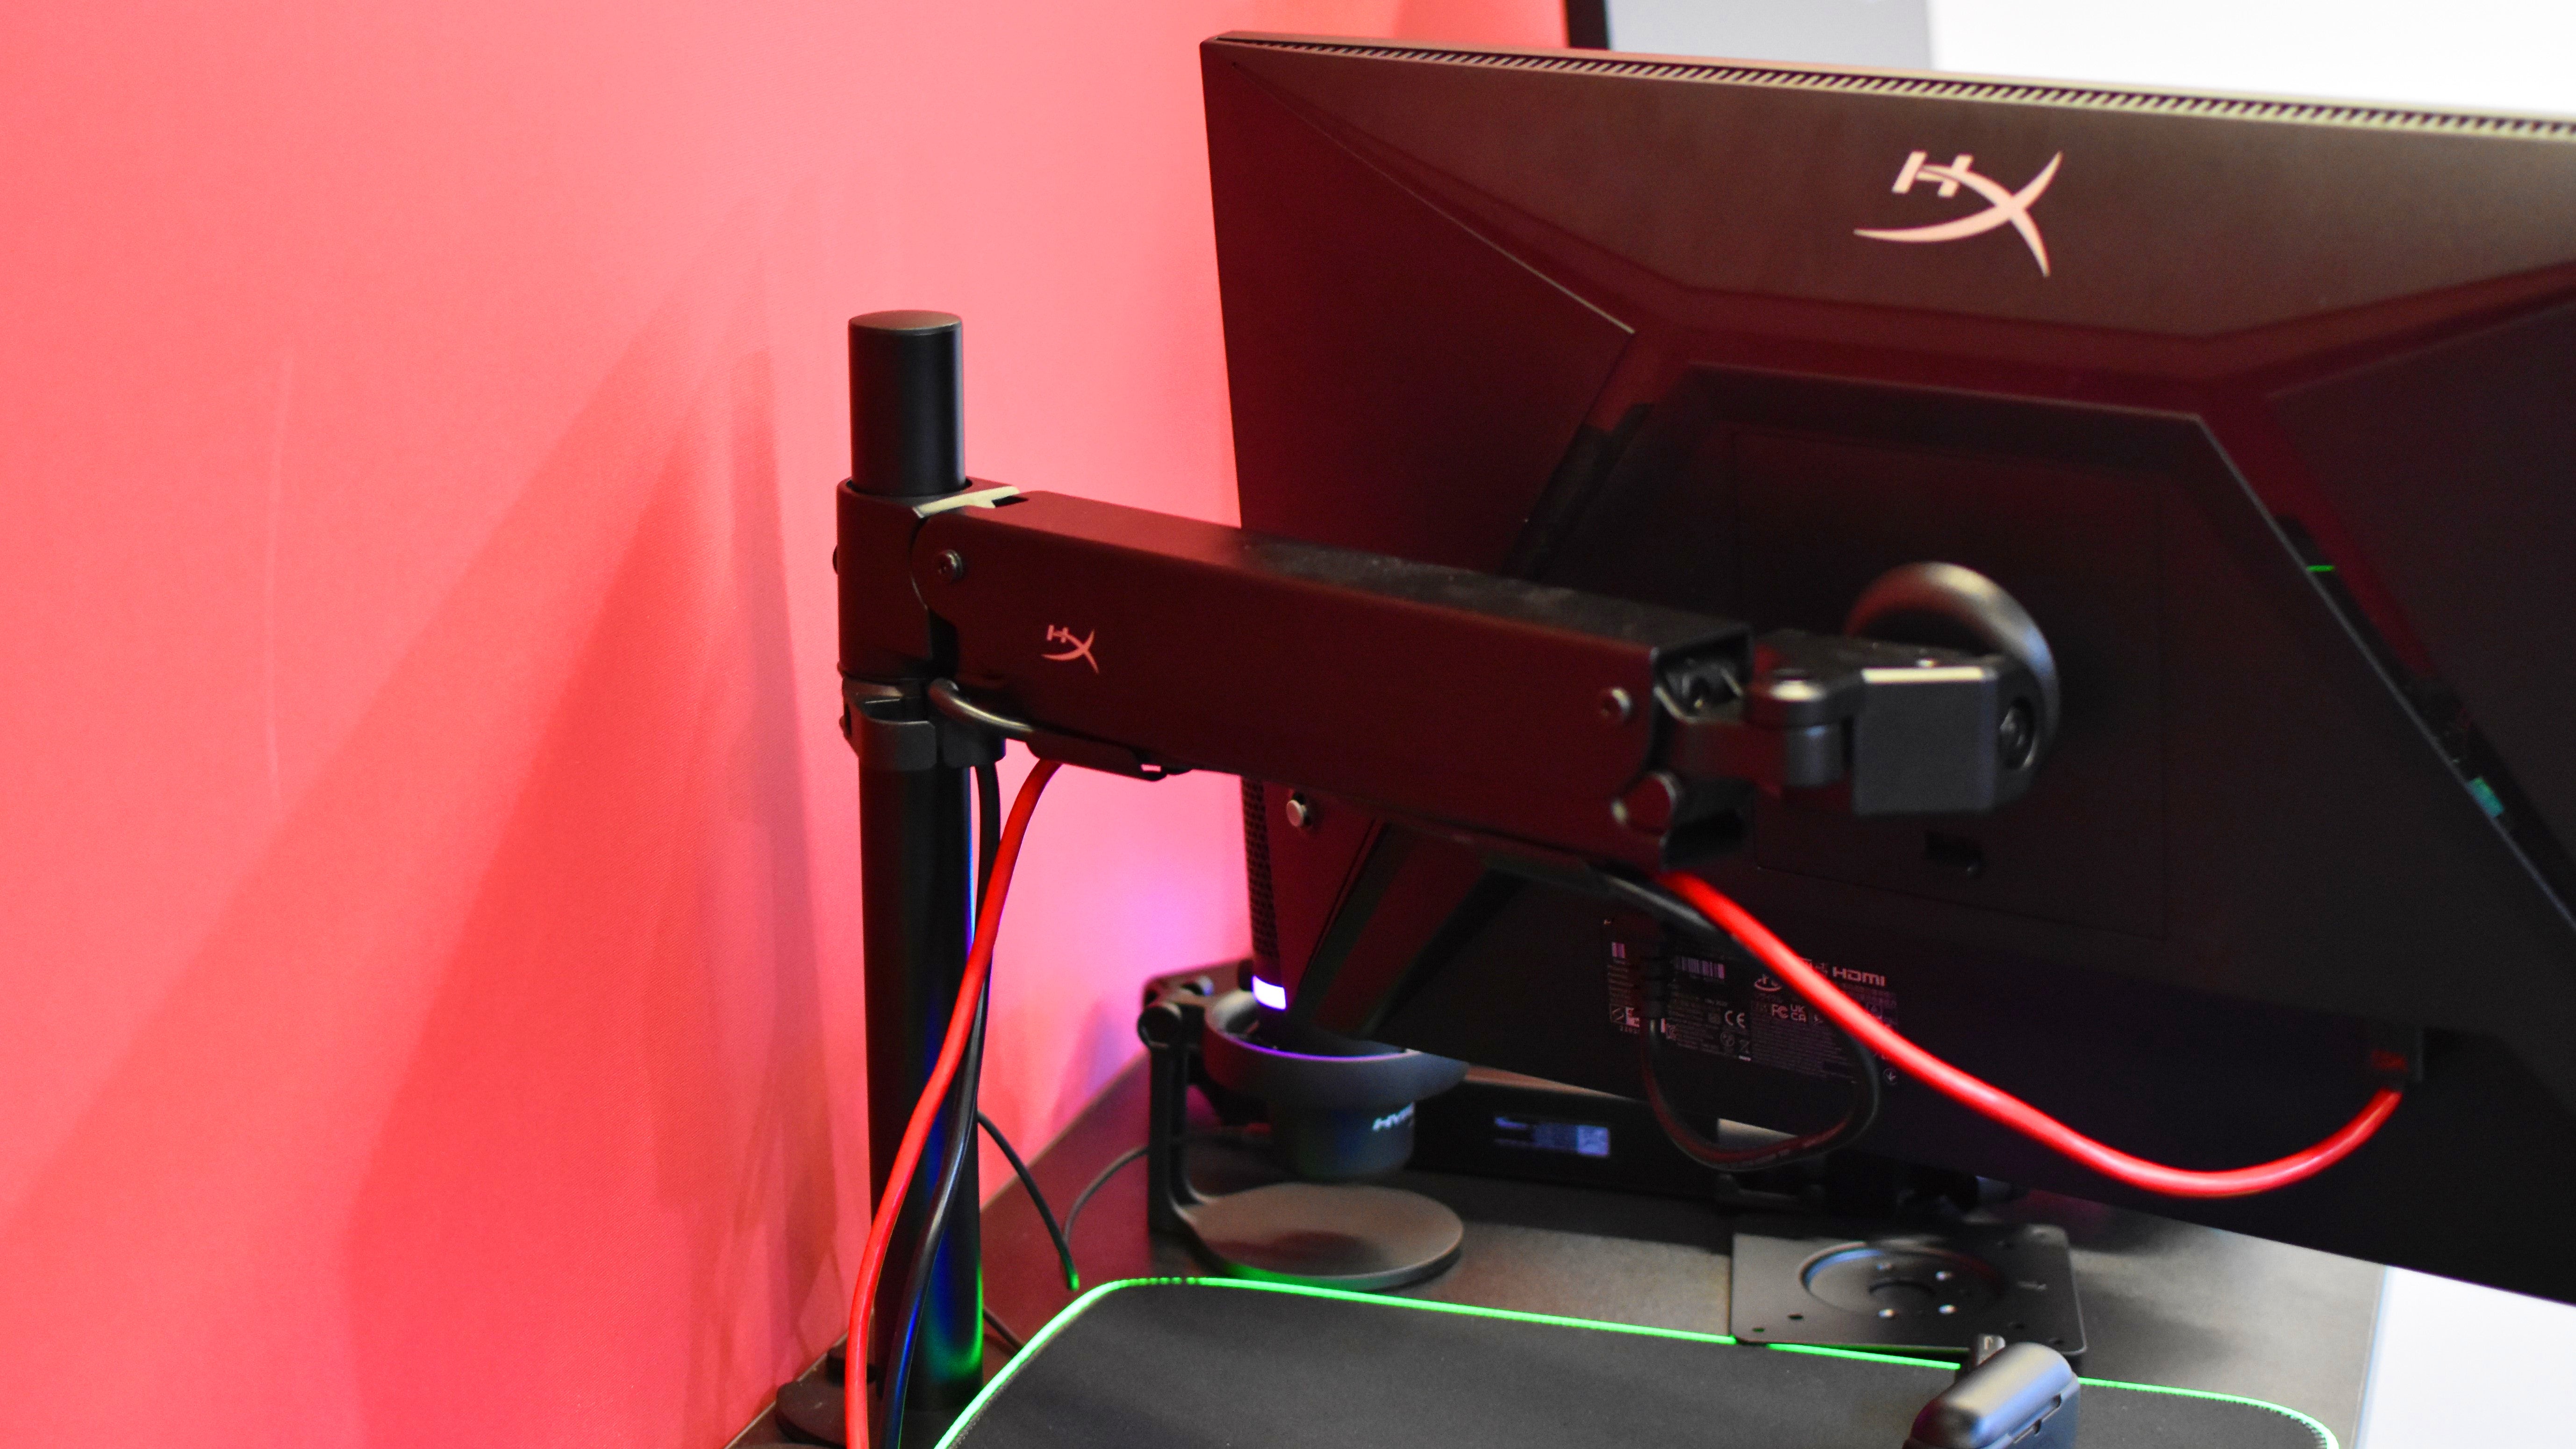 The HyperX Armada Gaming Mount holding up an Armada 27 gaming monitor.